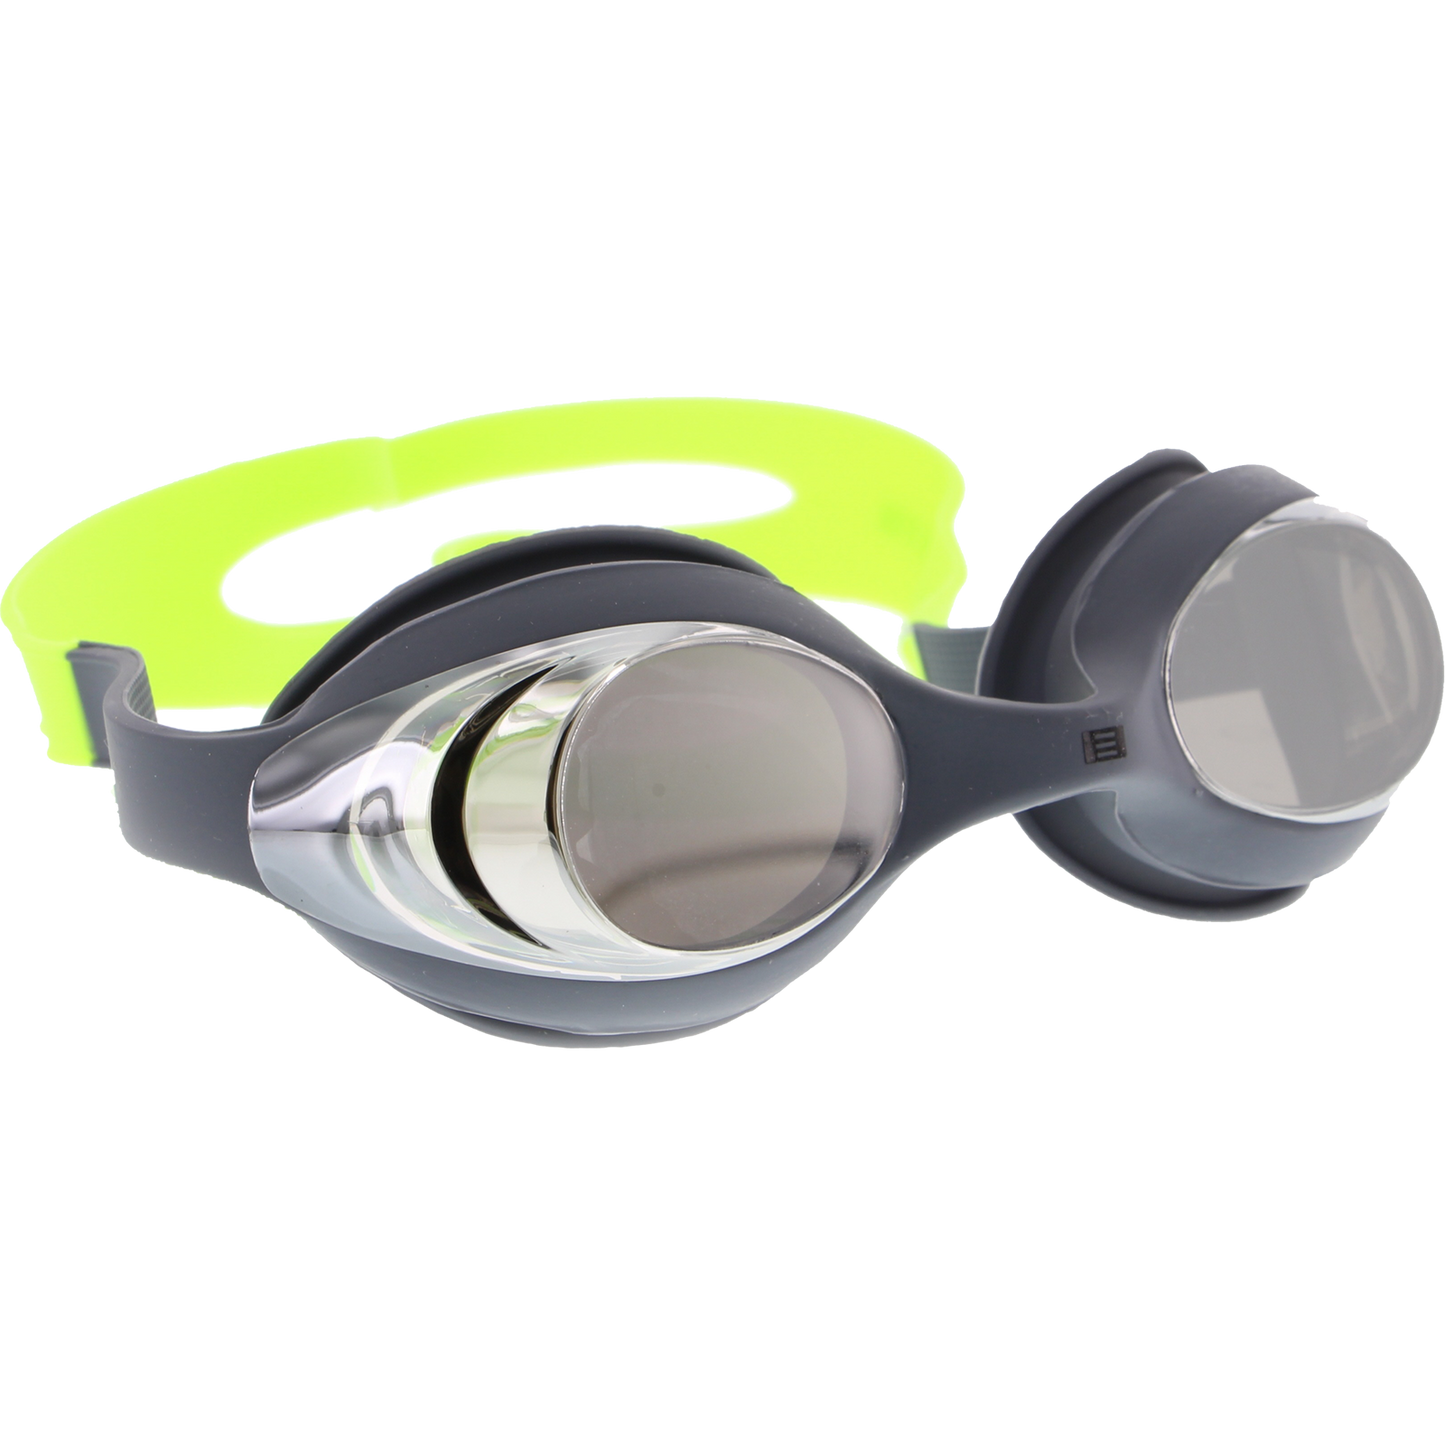 DMC Stealth Swim Goggles - Neon Green/Charcoal